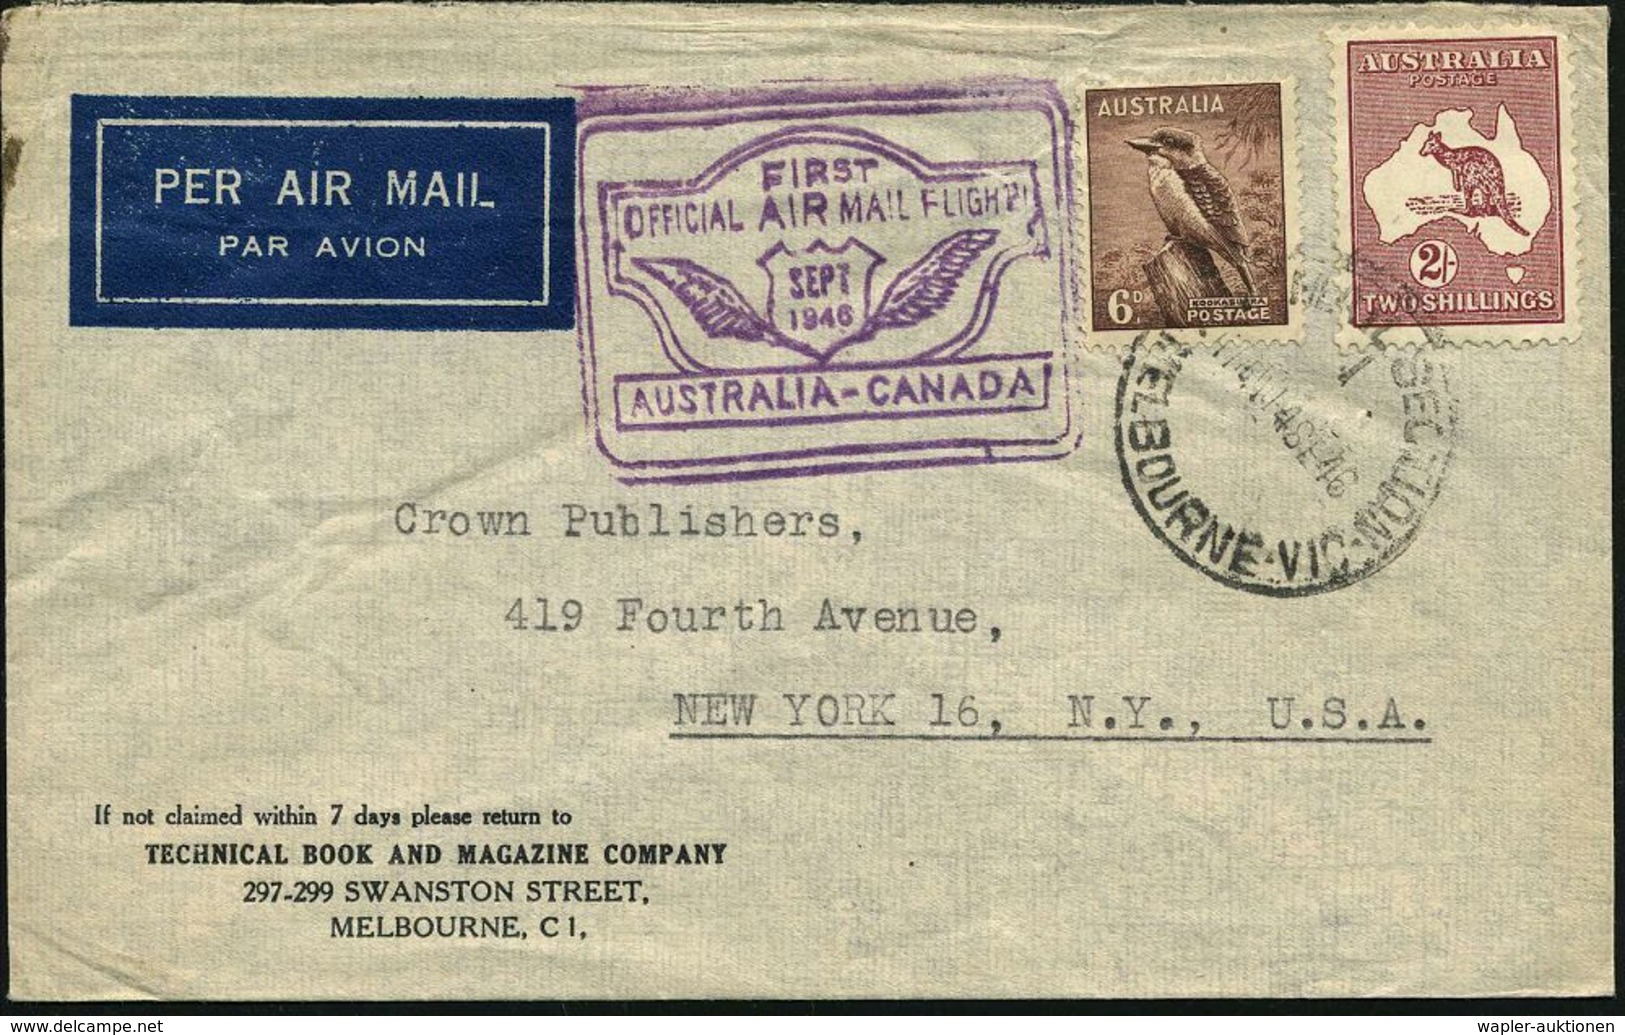 AUSTRALIEN 1946 (15.9.) Erstflug (B.C.P.A.): Australien - Canada, Etappe San Francisco , 1K: MELBOURNE + Viol. Flp.-HdN  - Other (Air)